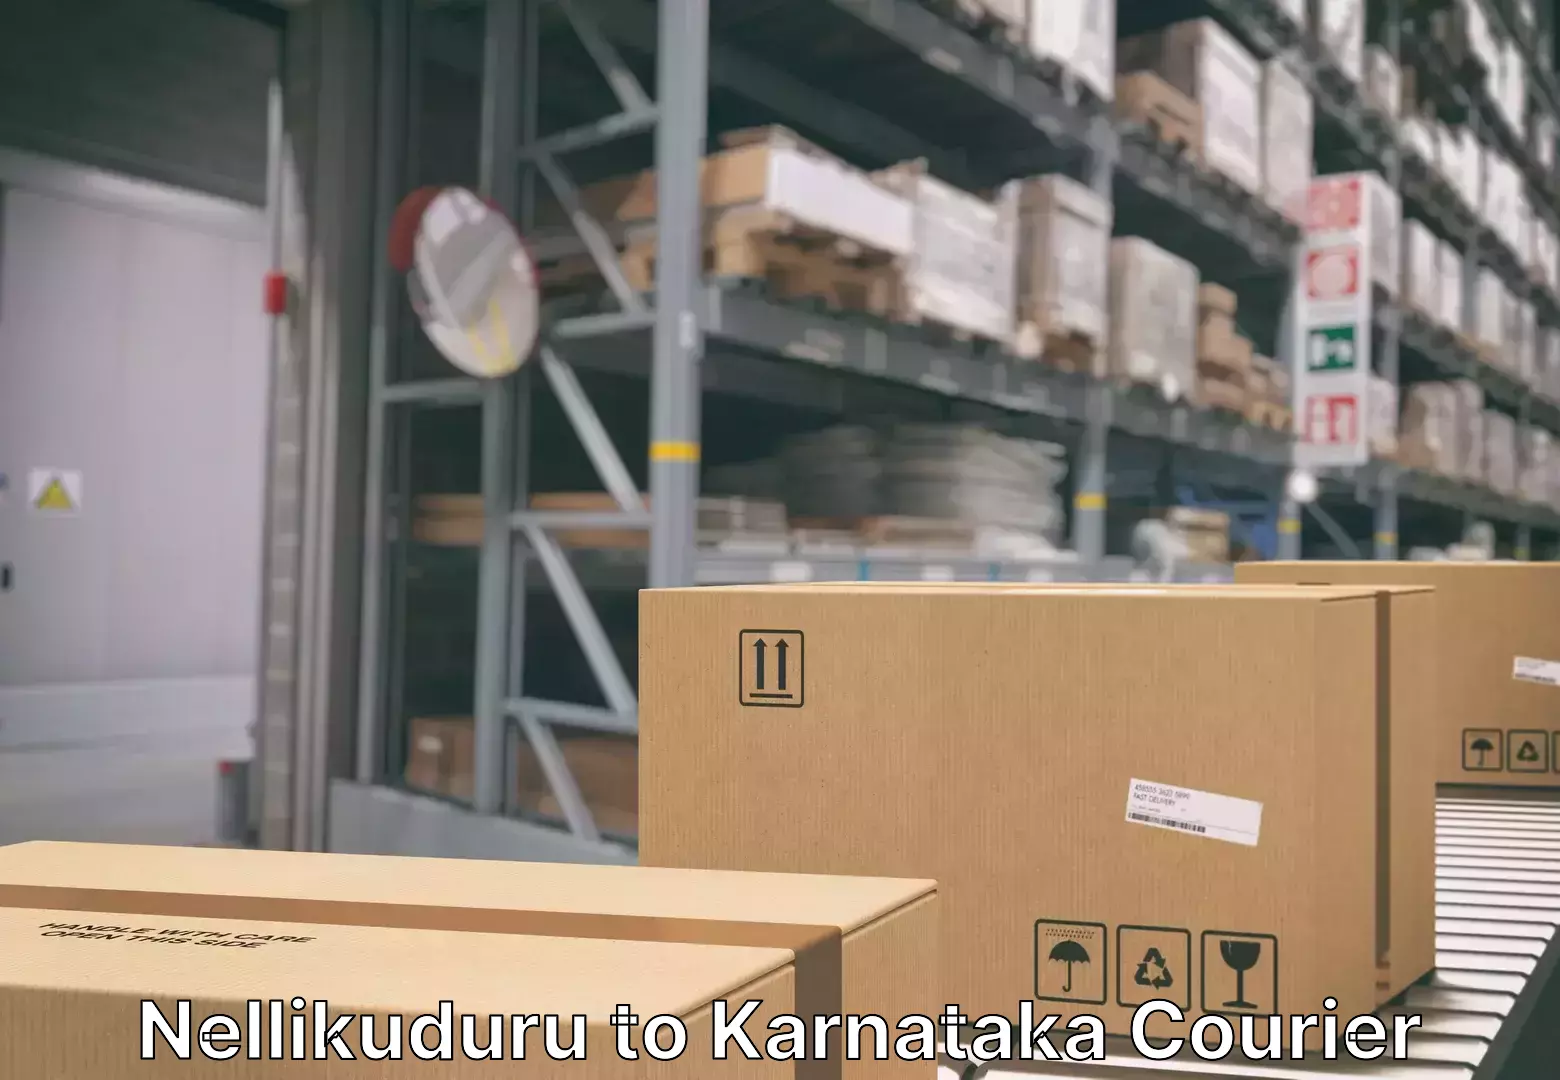 Home goods moving company Nellikuduru to Karnataka